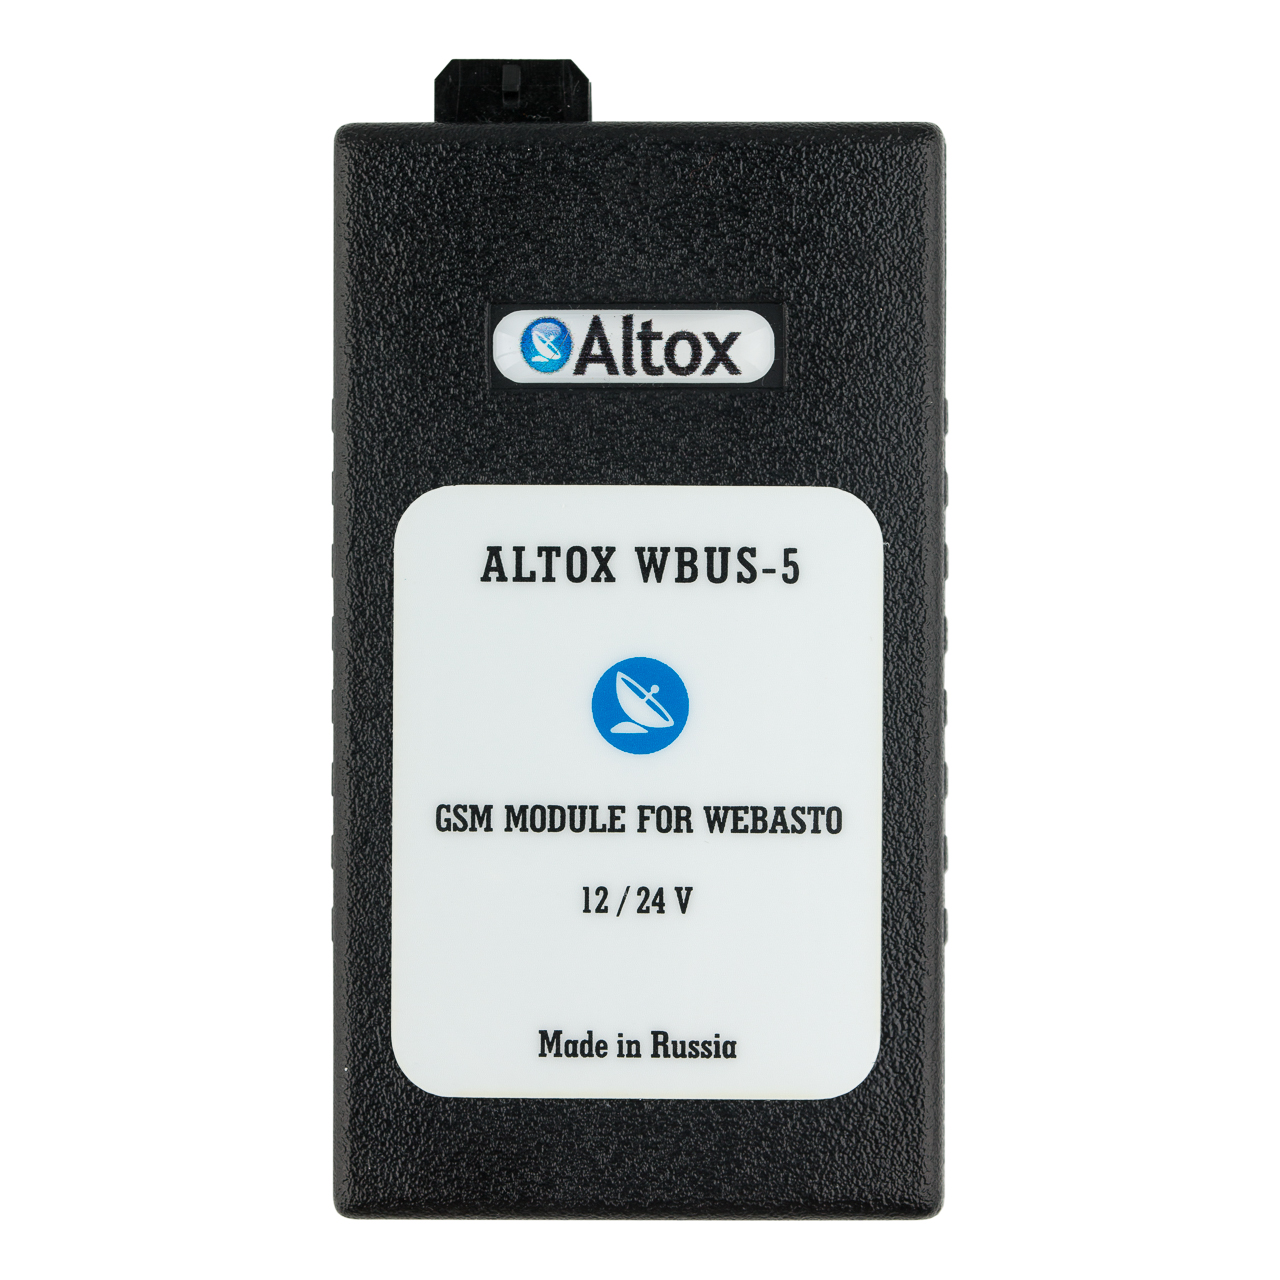 В комплекте с GSM модулем Altox